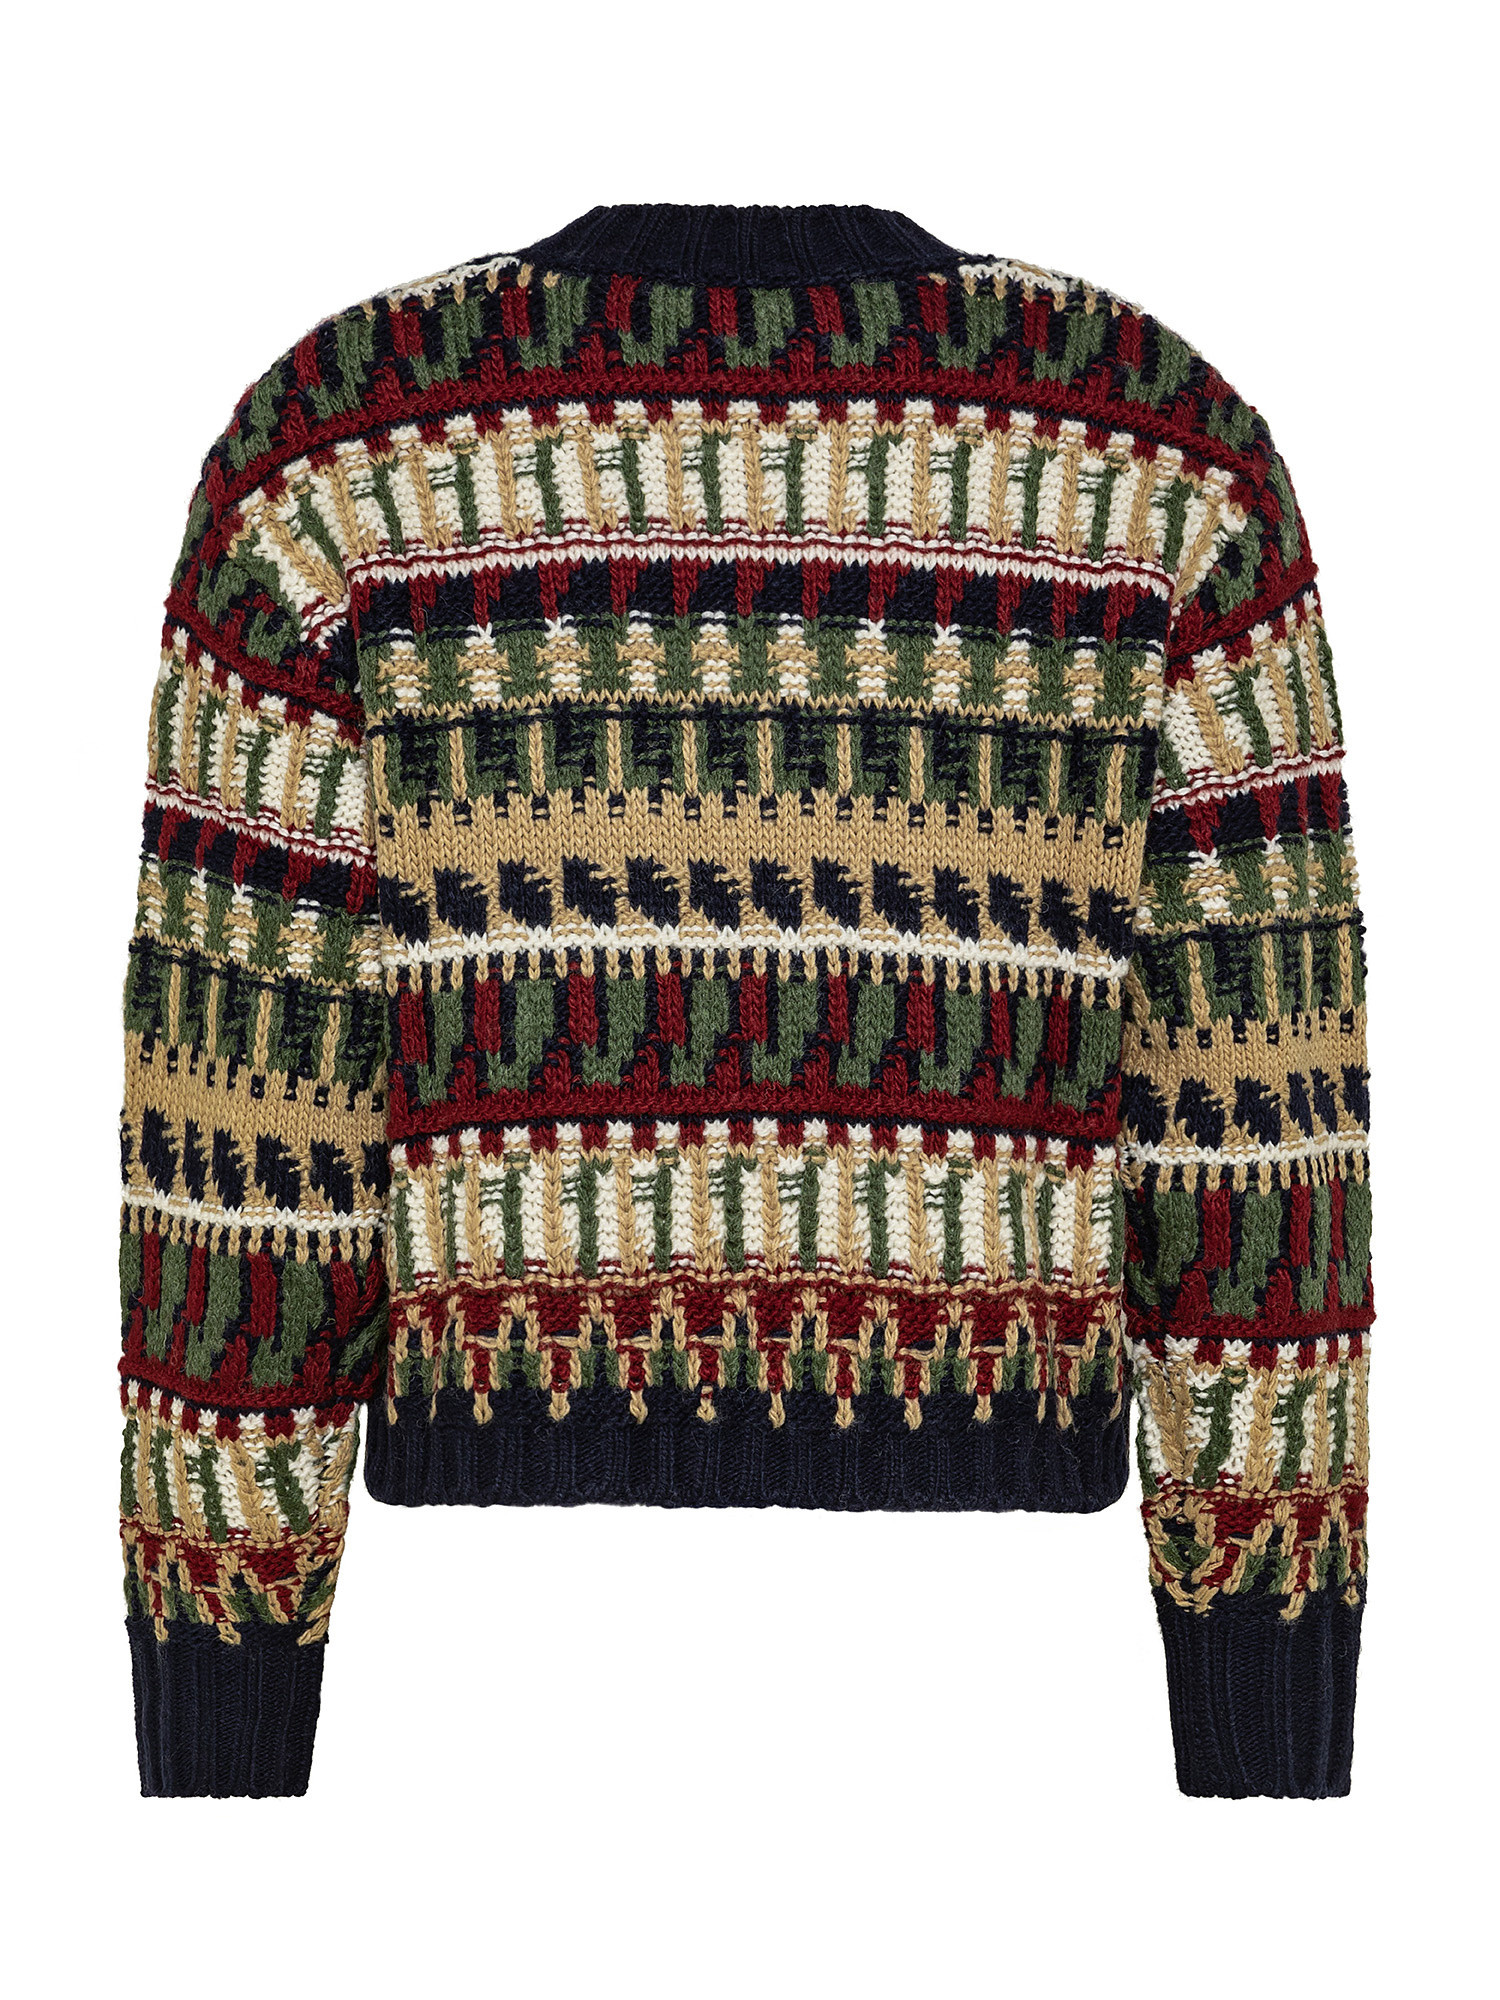 Barbara jacquard sweater, Multicolor, large image number 1